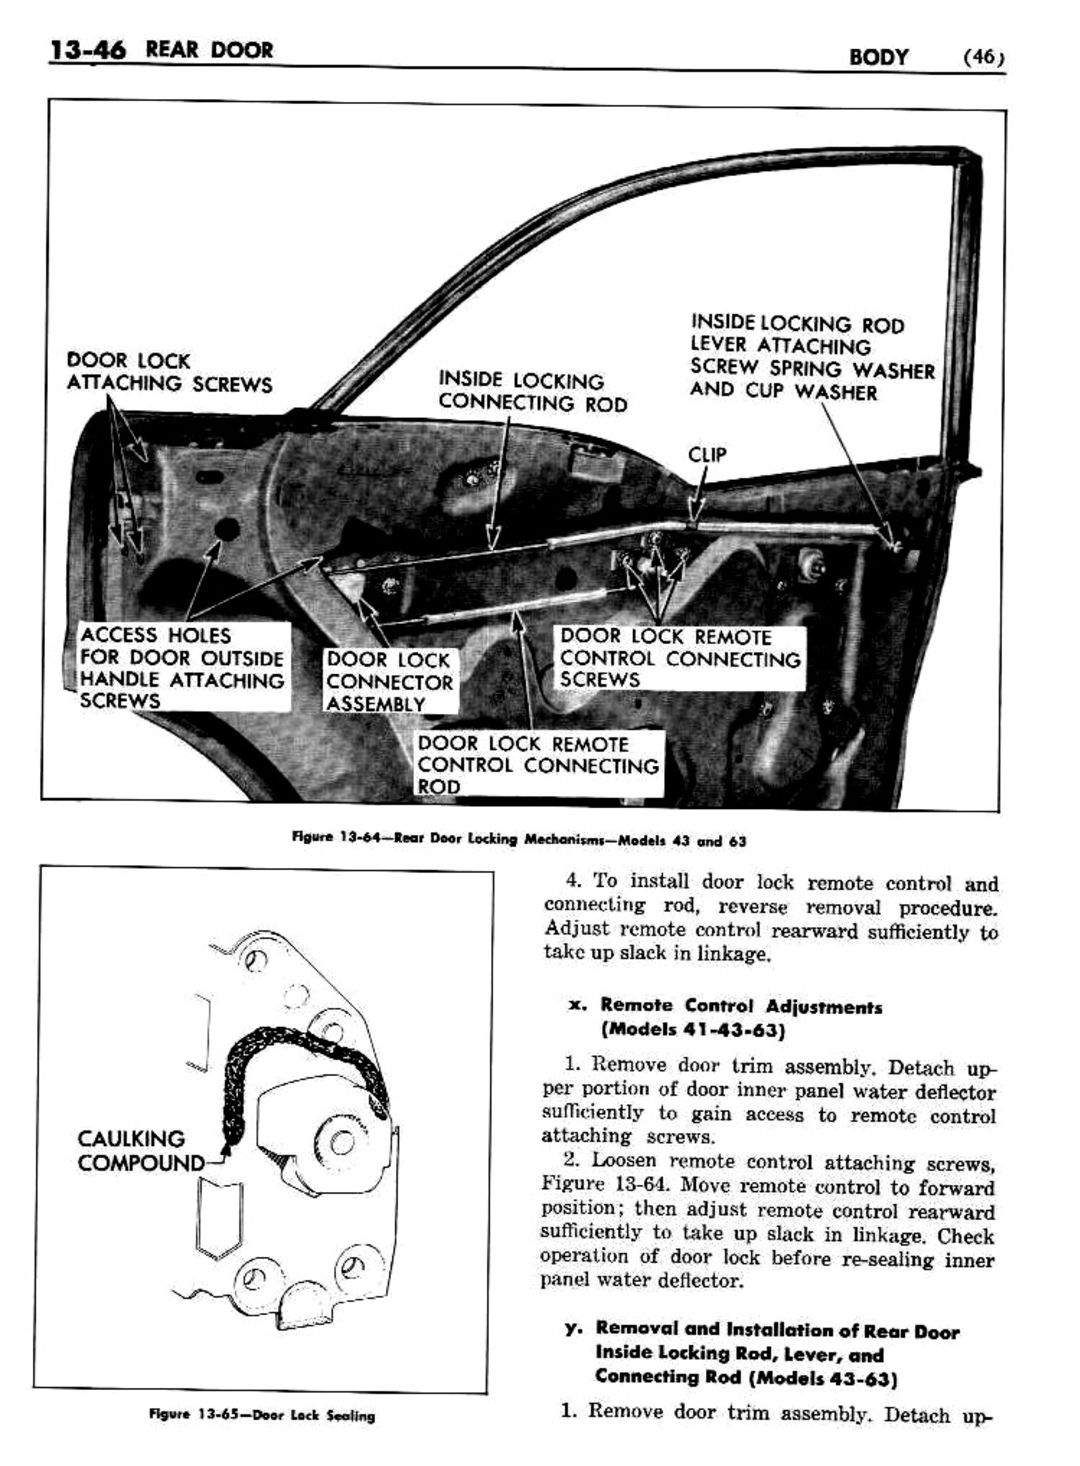 n_1958 Buick Body Service Manual-047-047.jpg